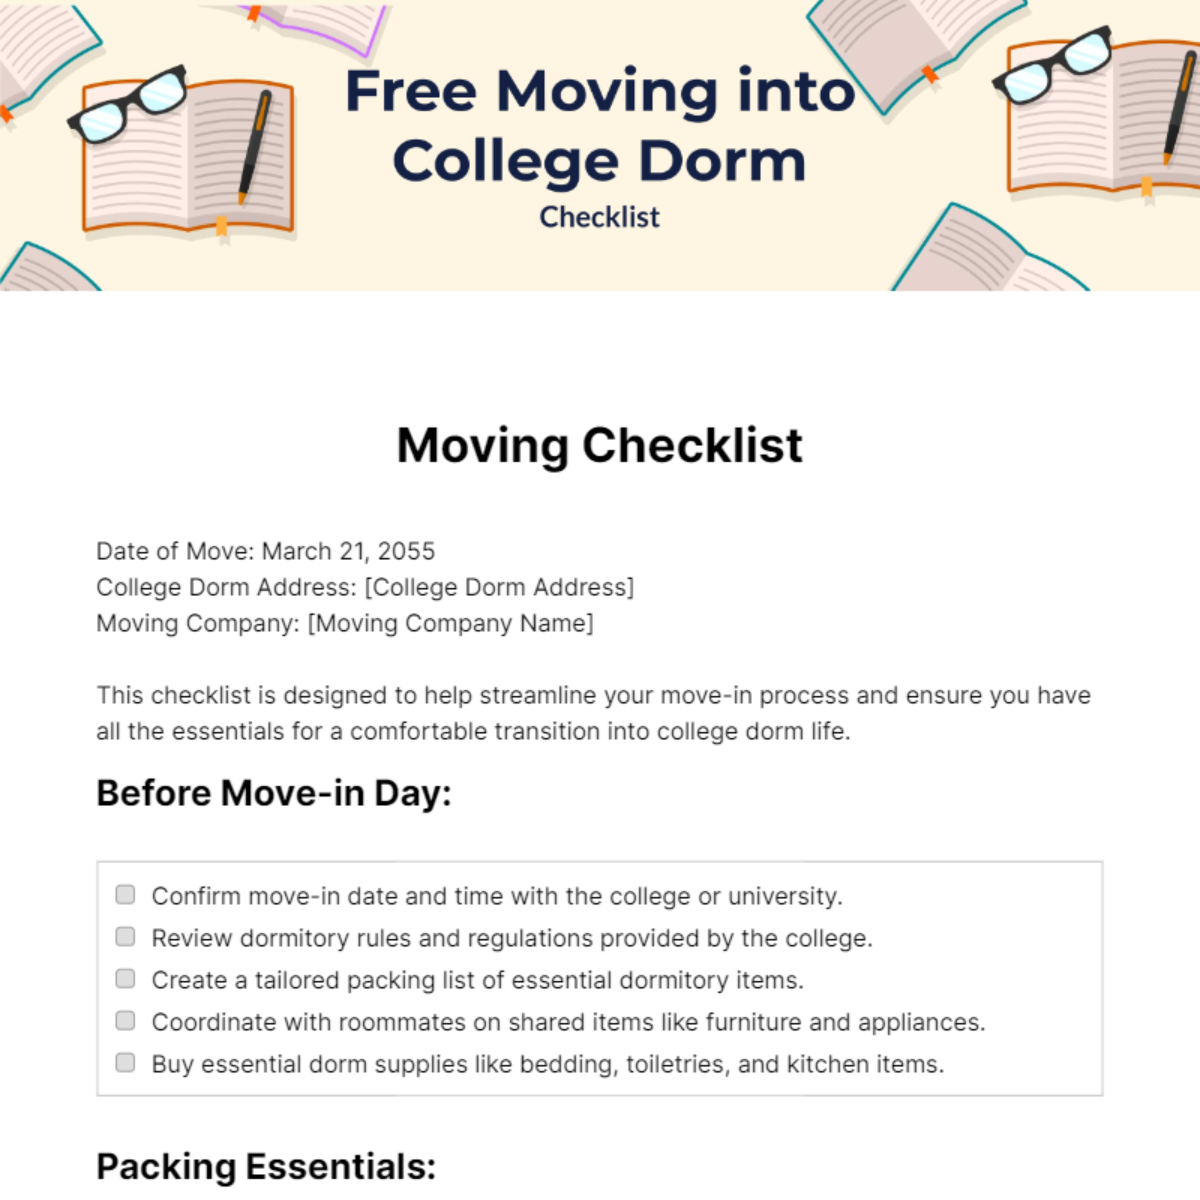 Free Moving into College Dorm Checklist Template